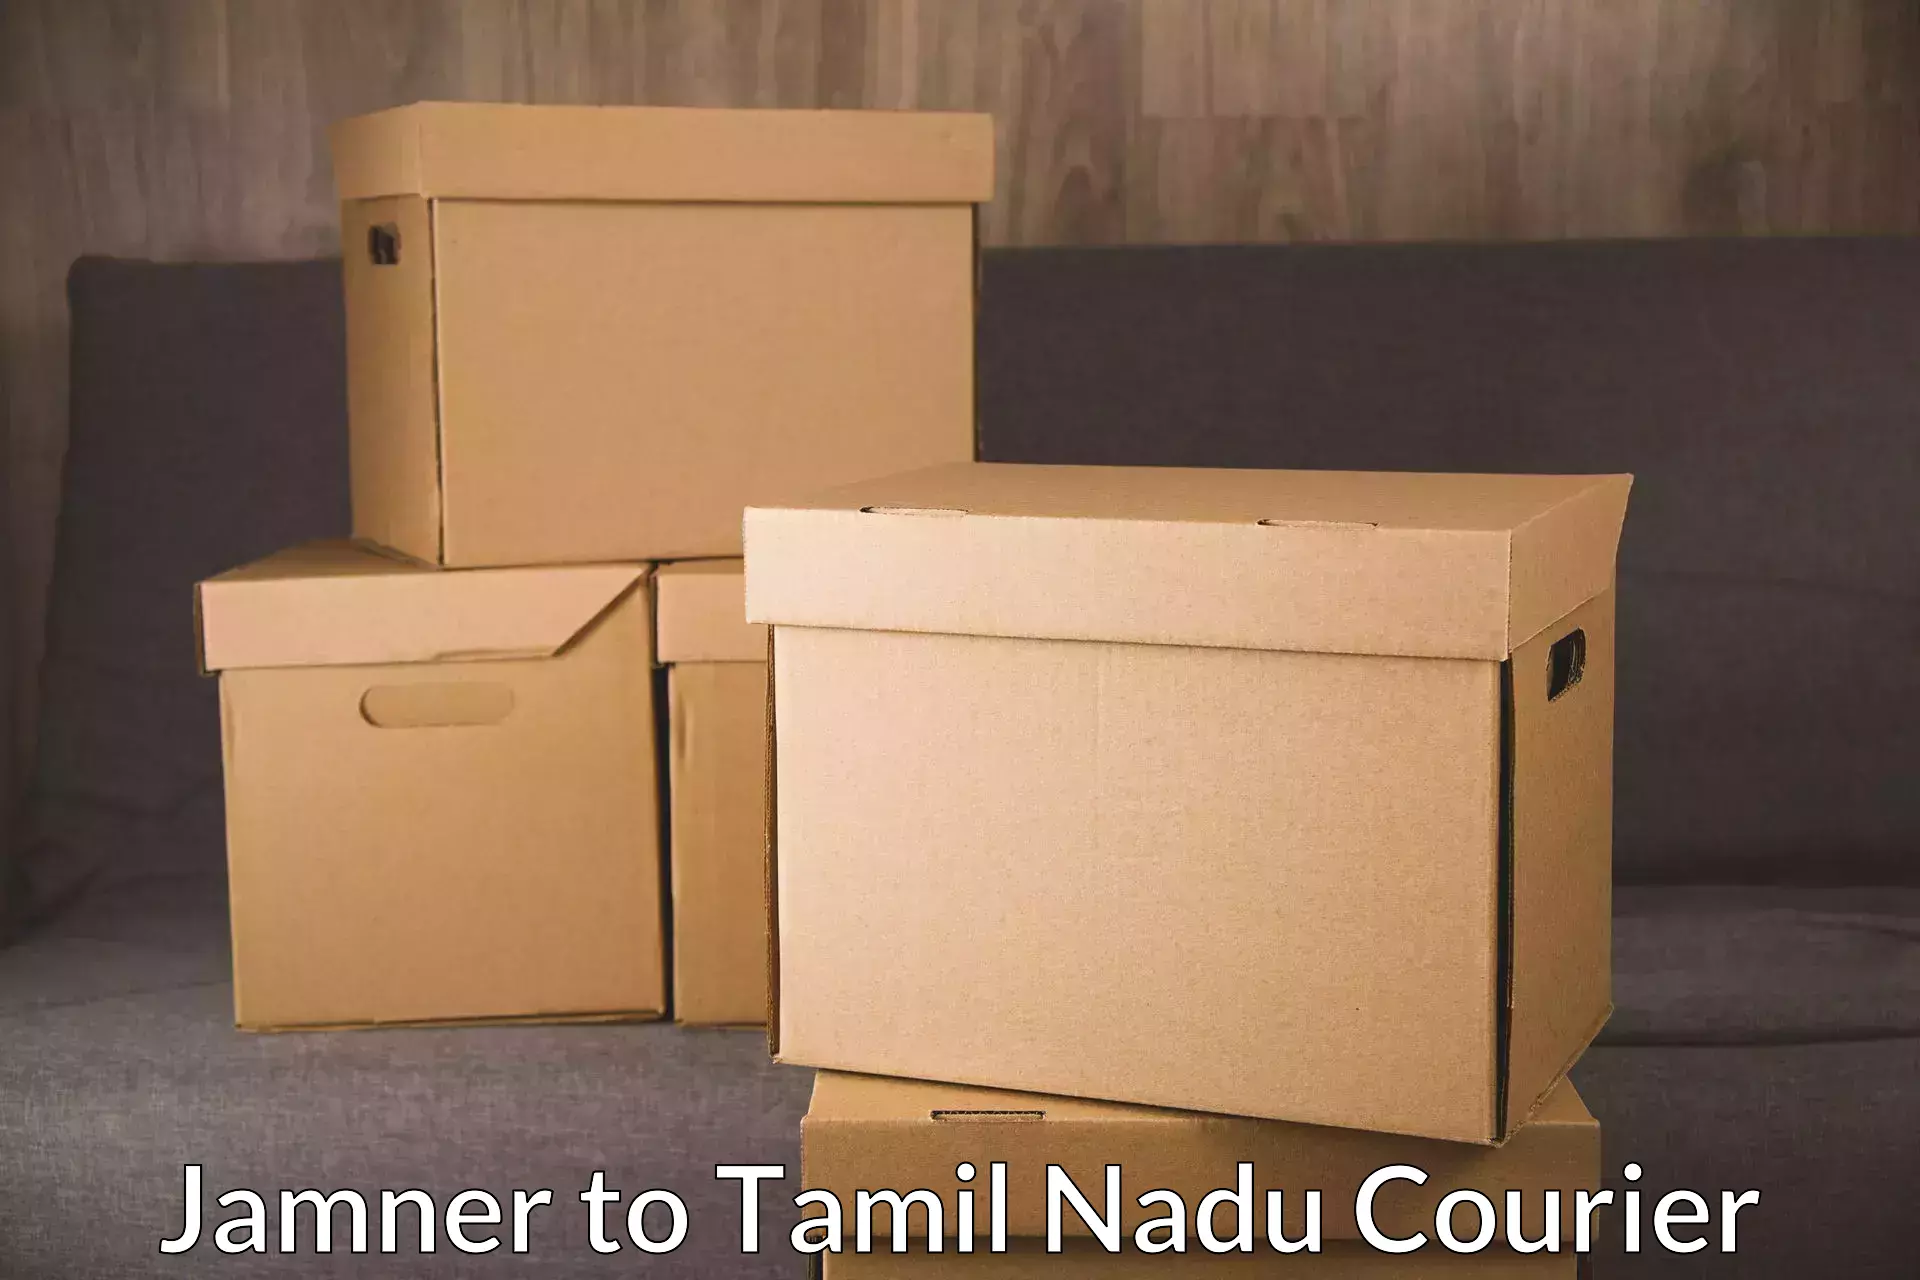 Courier service comparison Jamner to Tamil Nadu